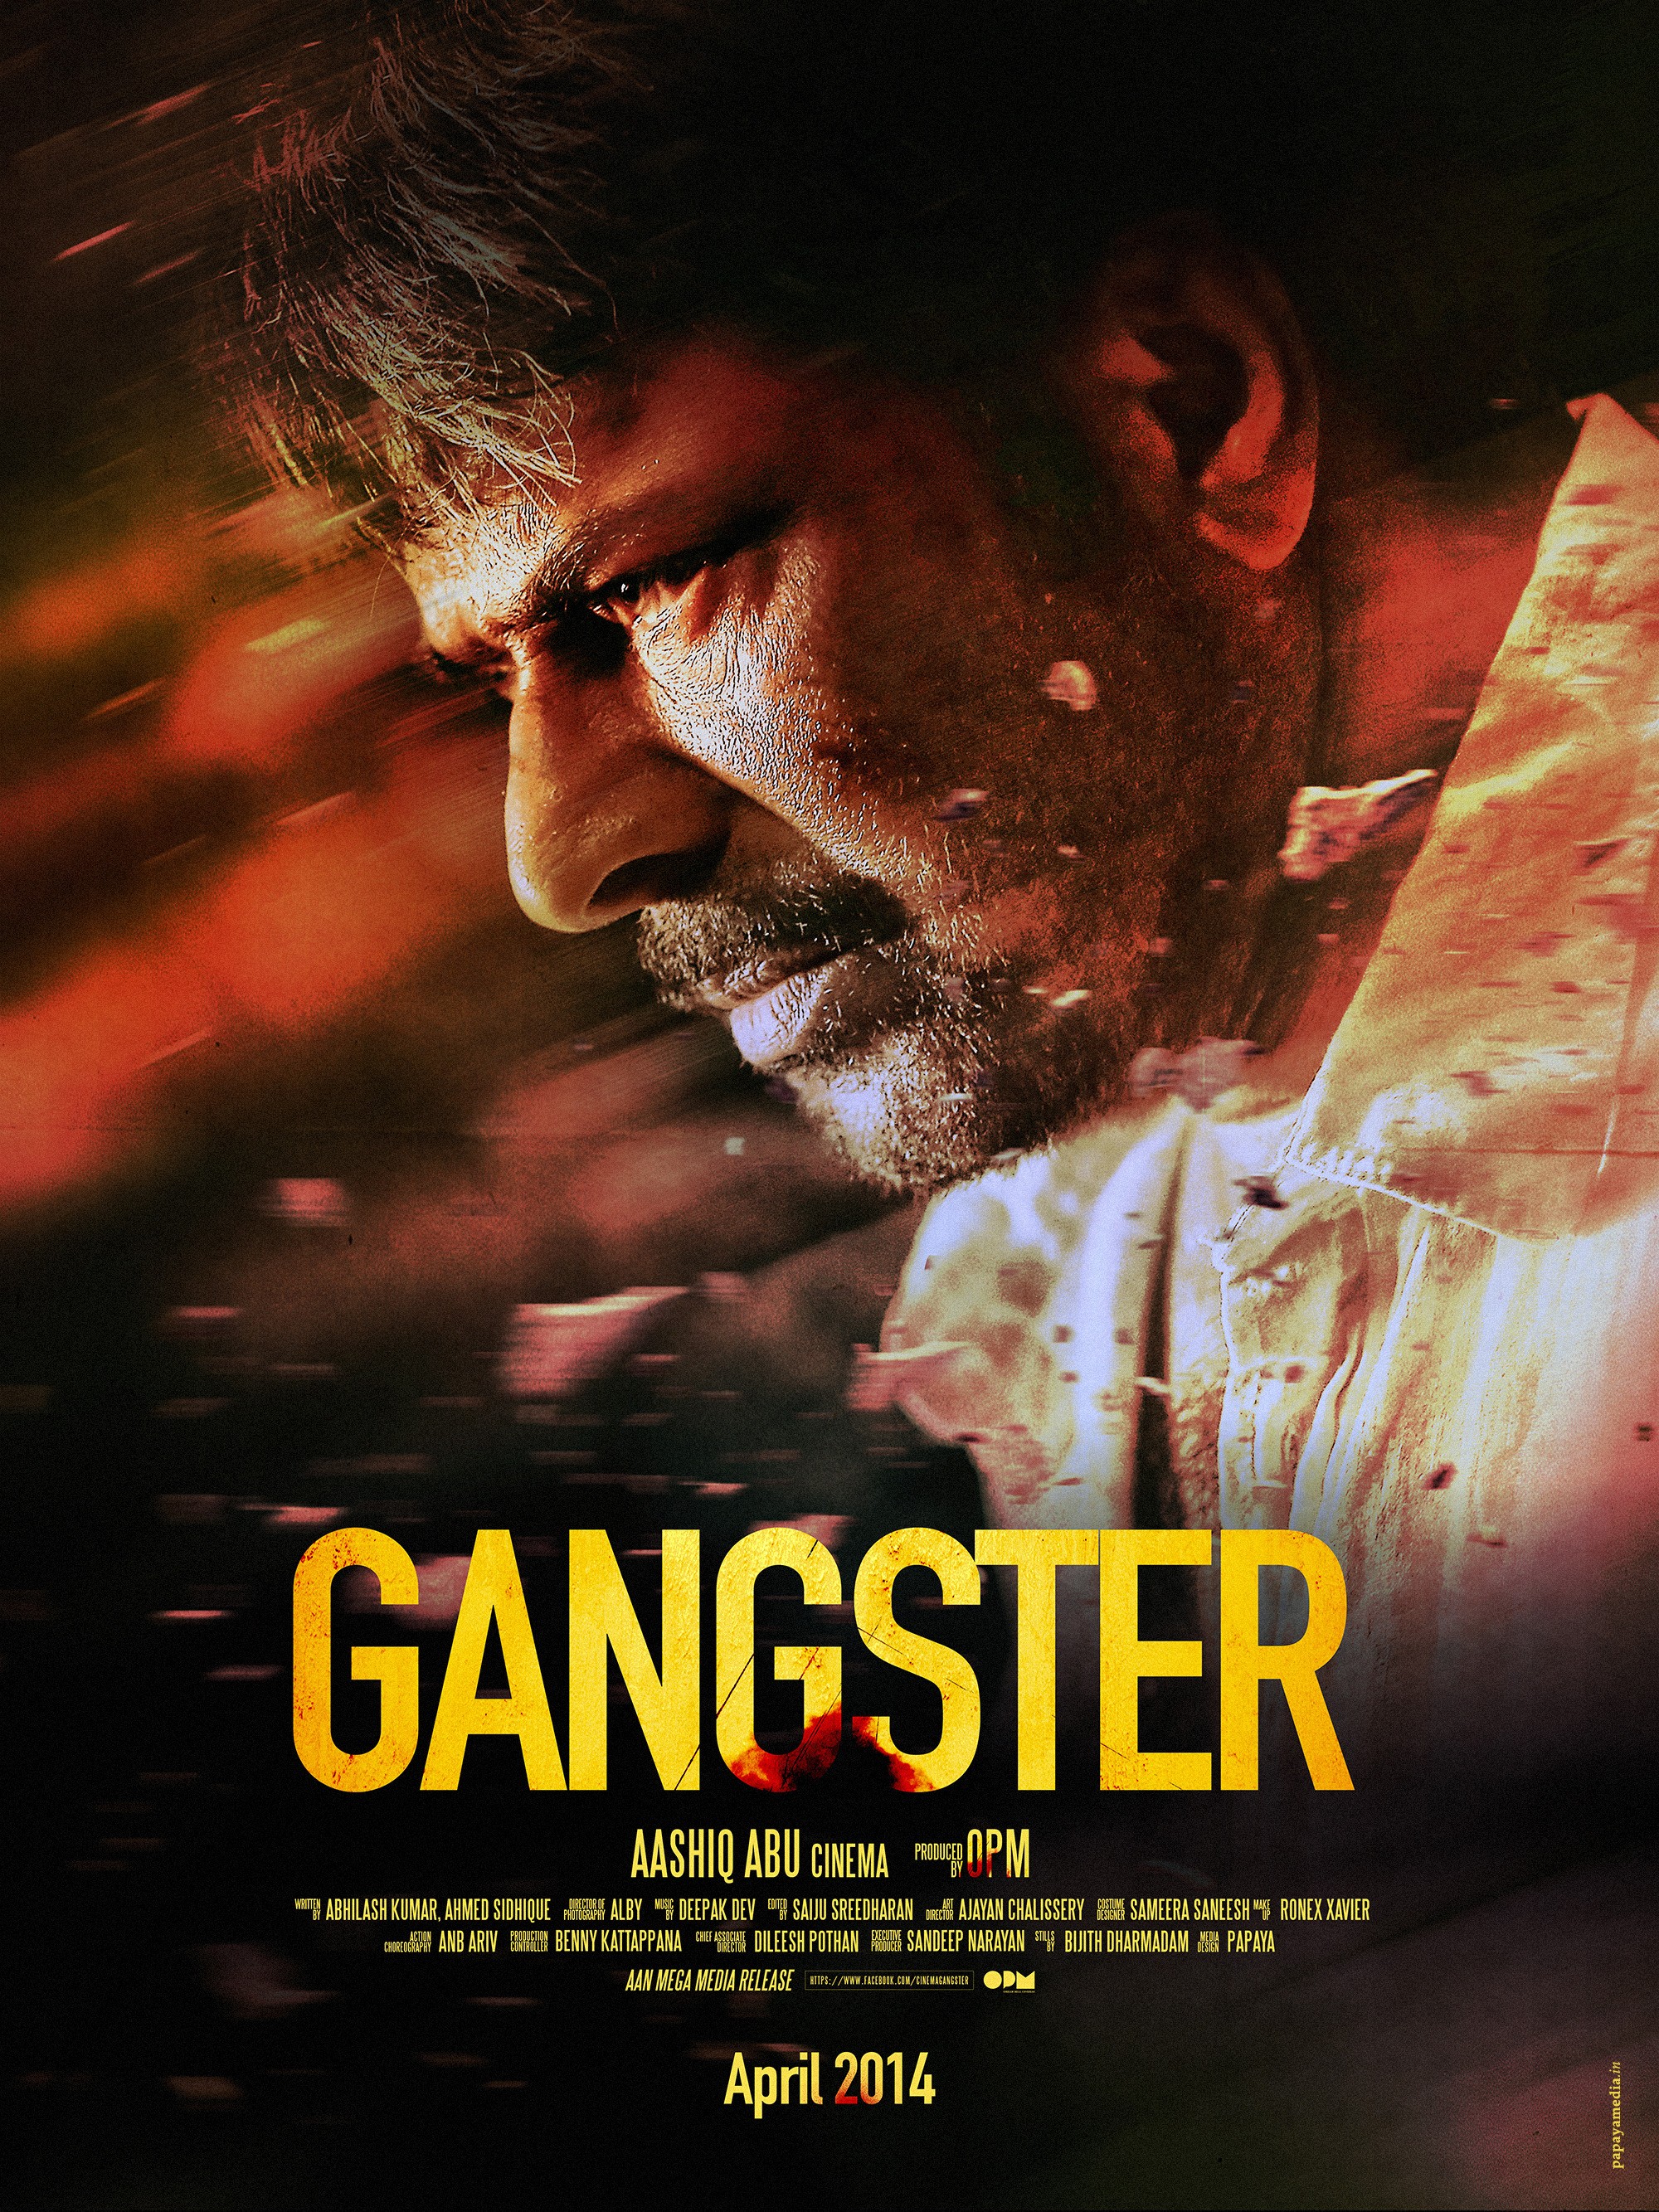 Mega Sized Movie Poster Image for Gangster (#4 of 6)